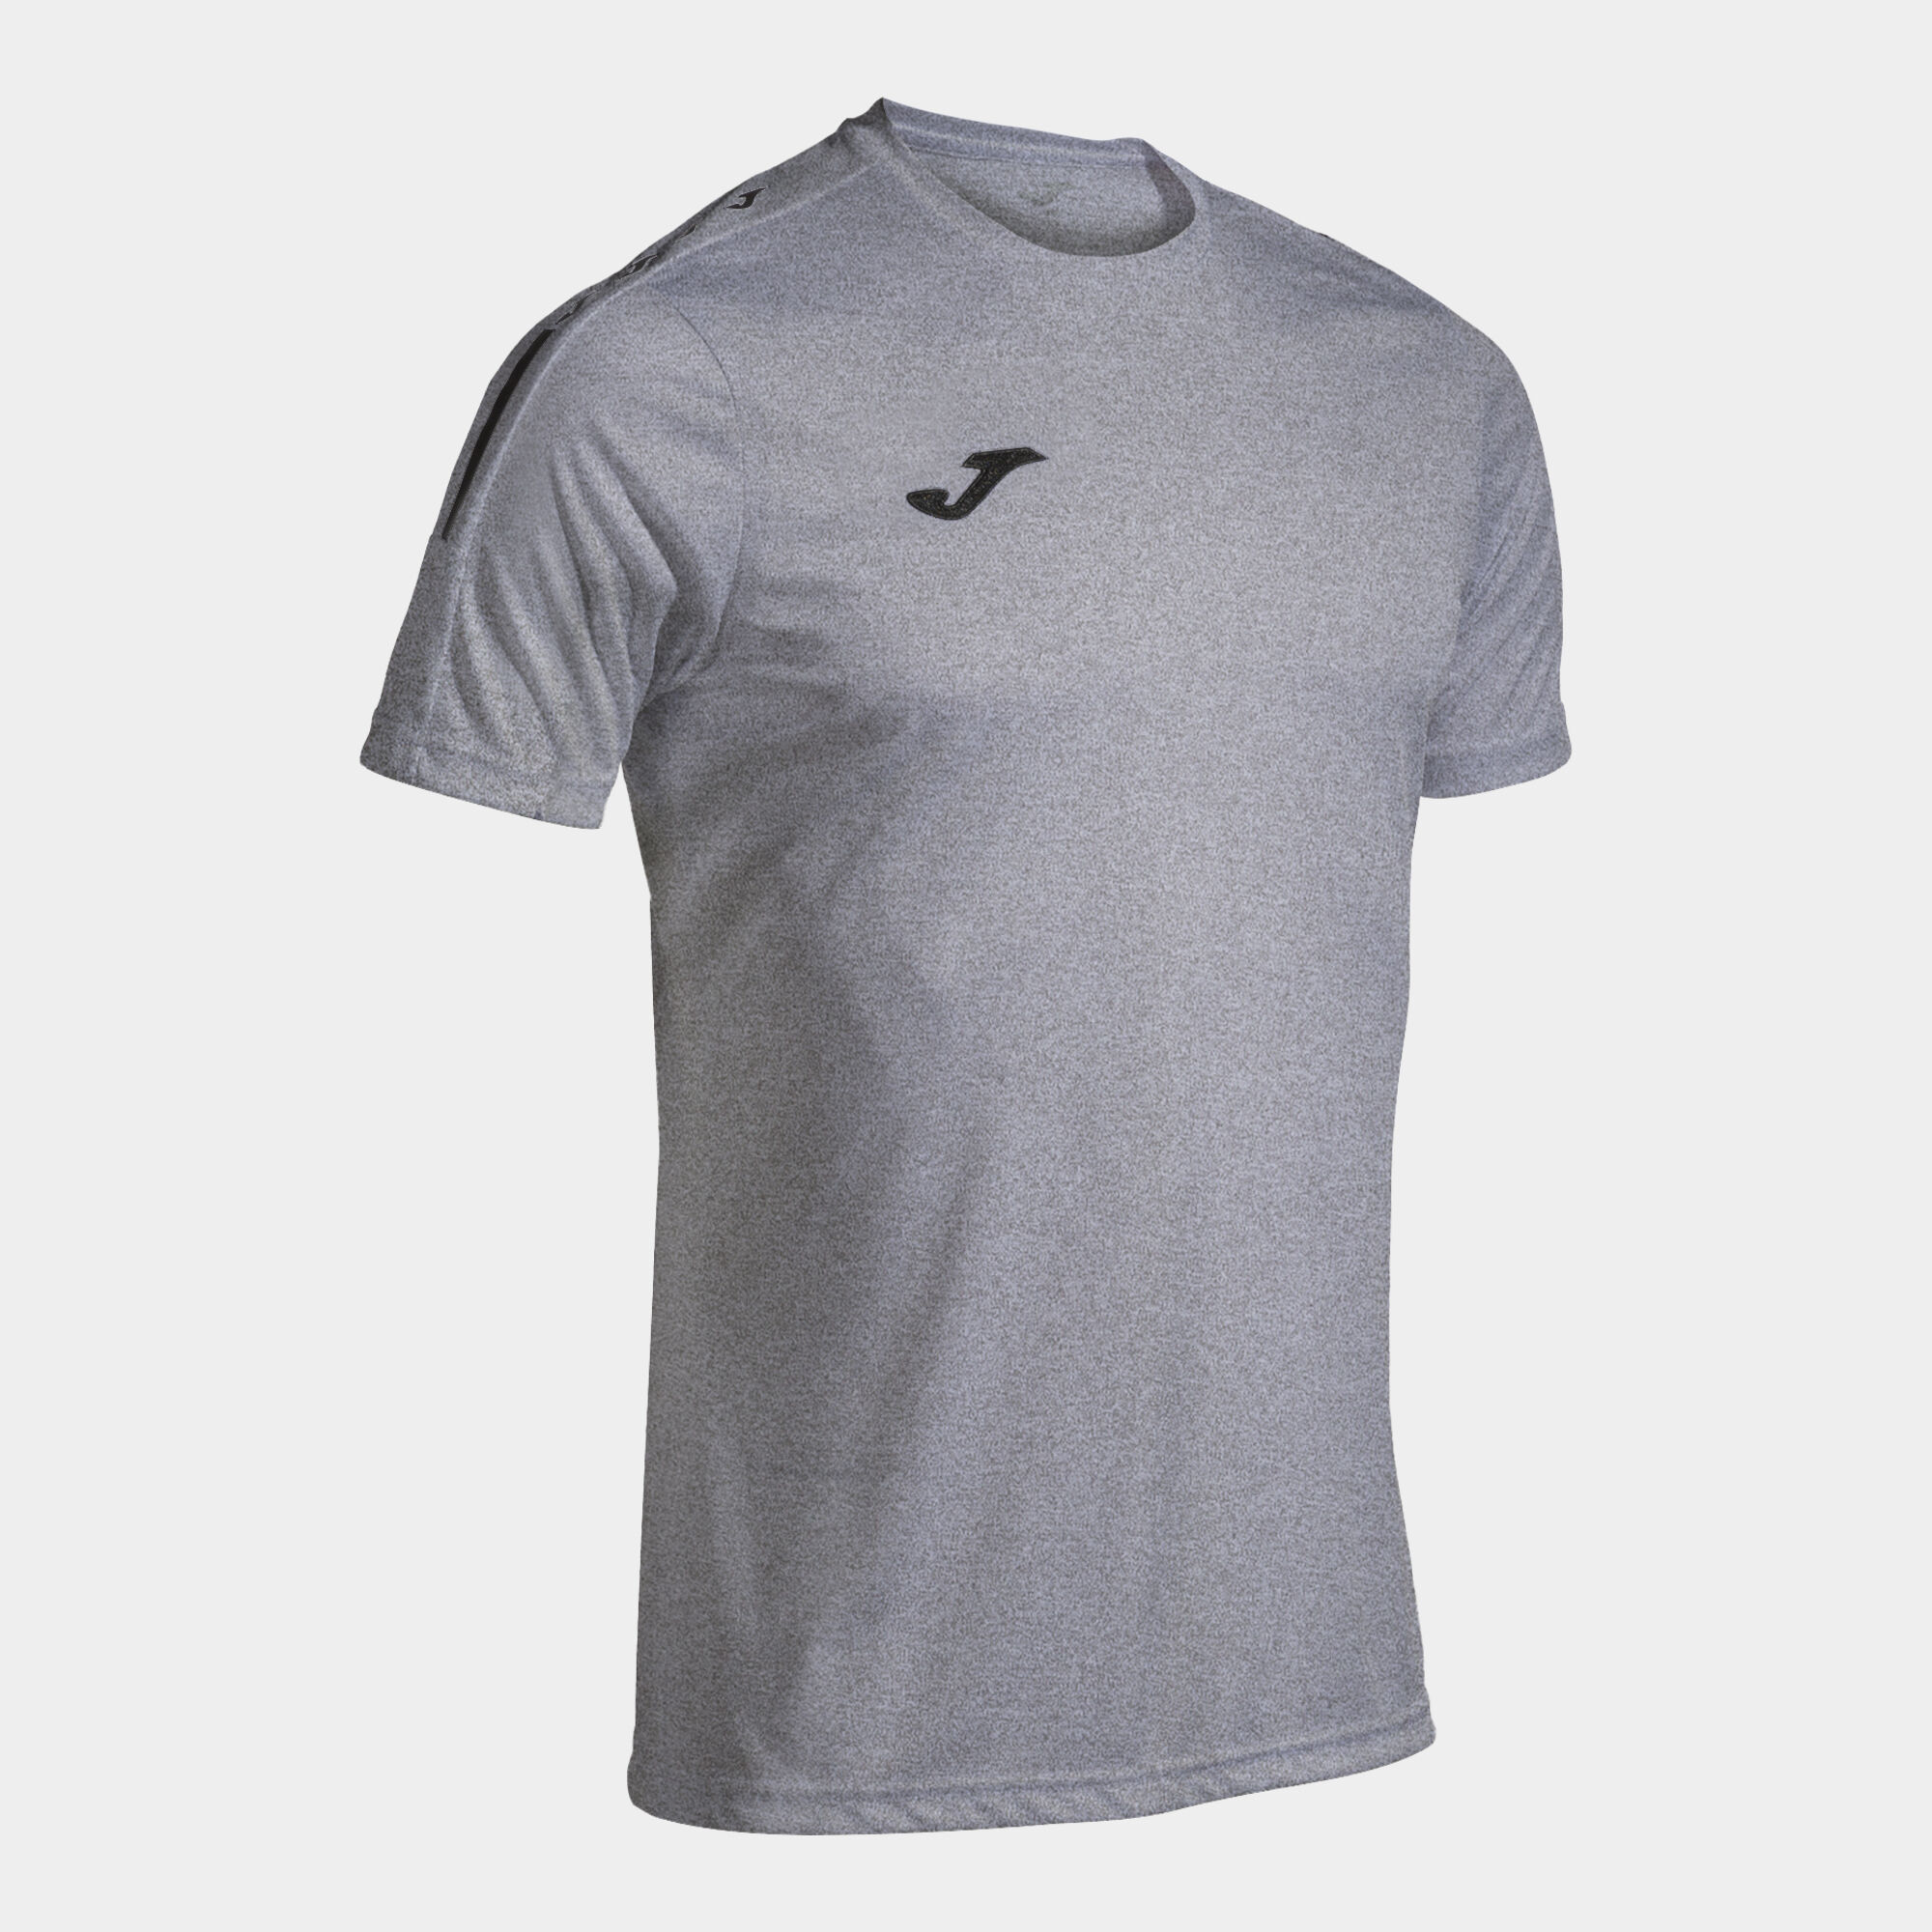 Camiseta manga corta hombre Olimpiada gris melange negro